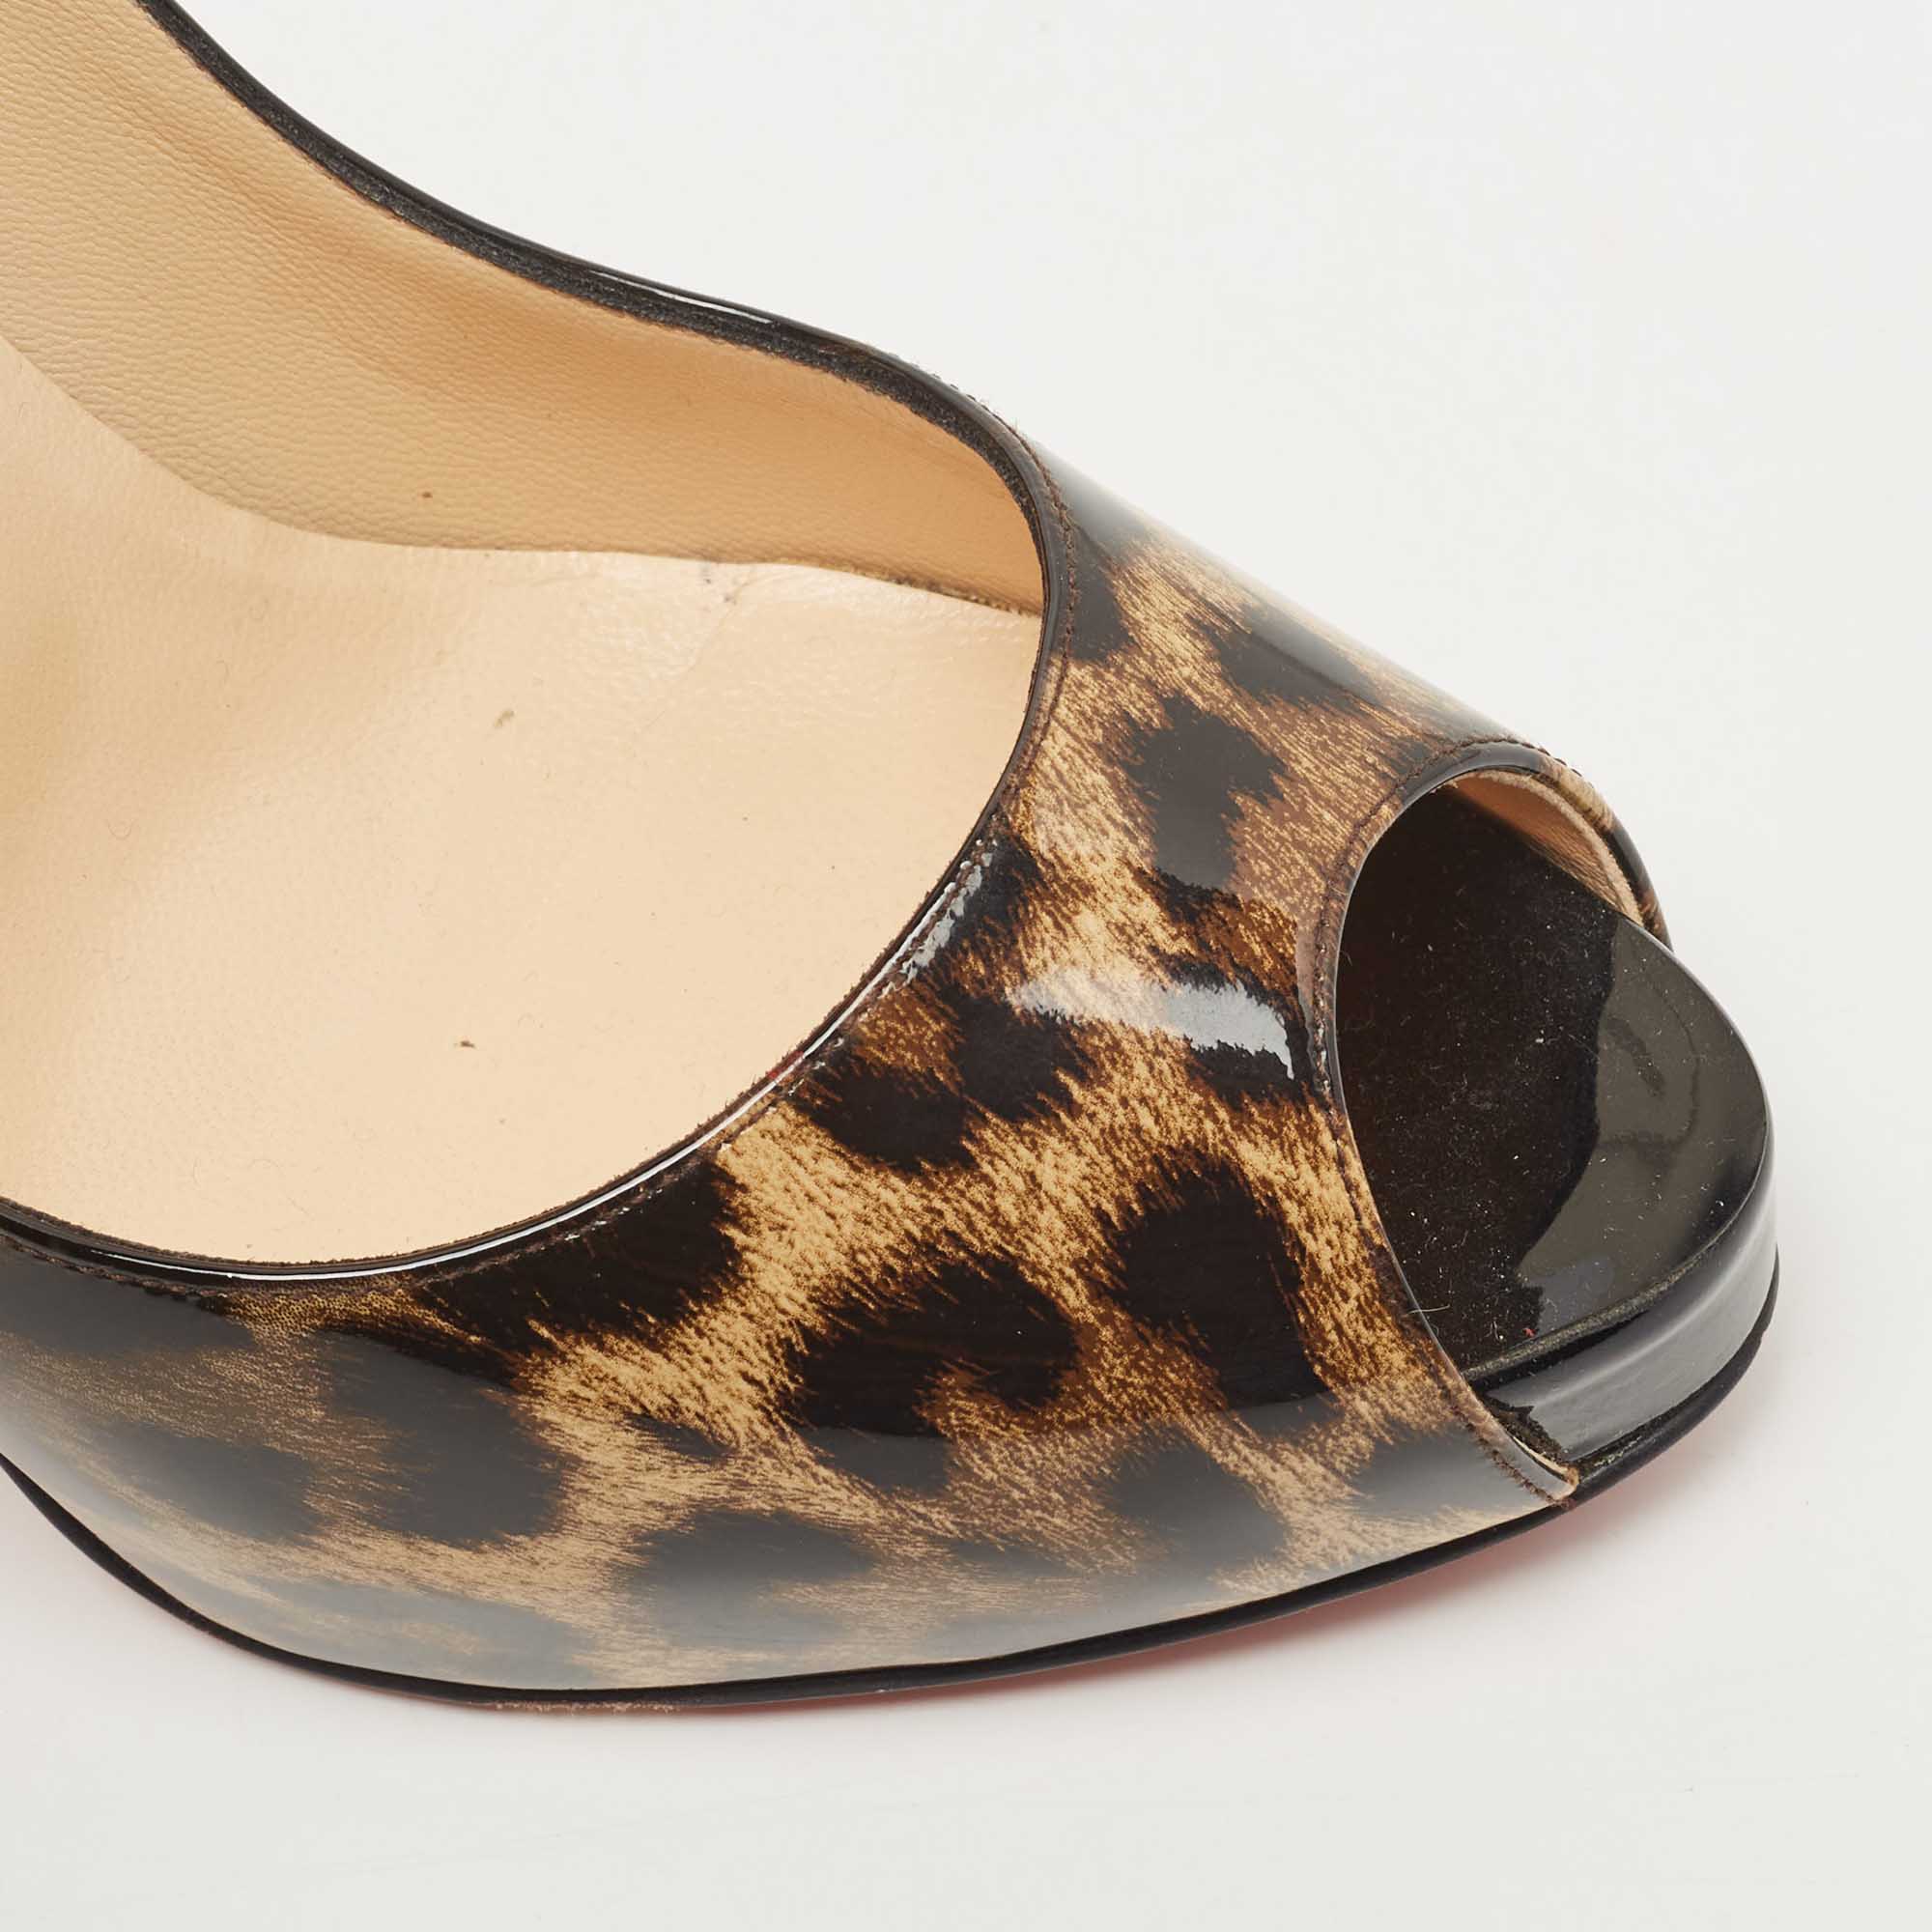 Christian Louboutin Black/Brown Leopard Print Ombre Patent Leather Peep Toe Pumps Size 40